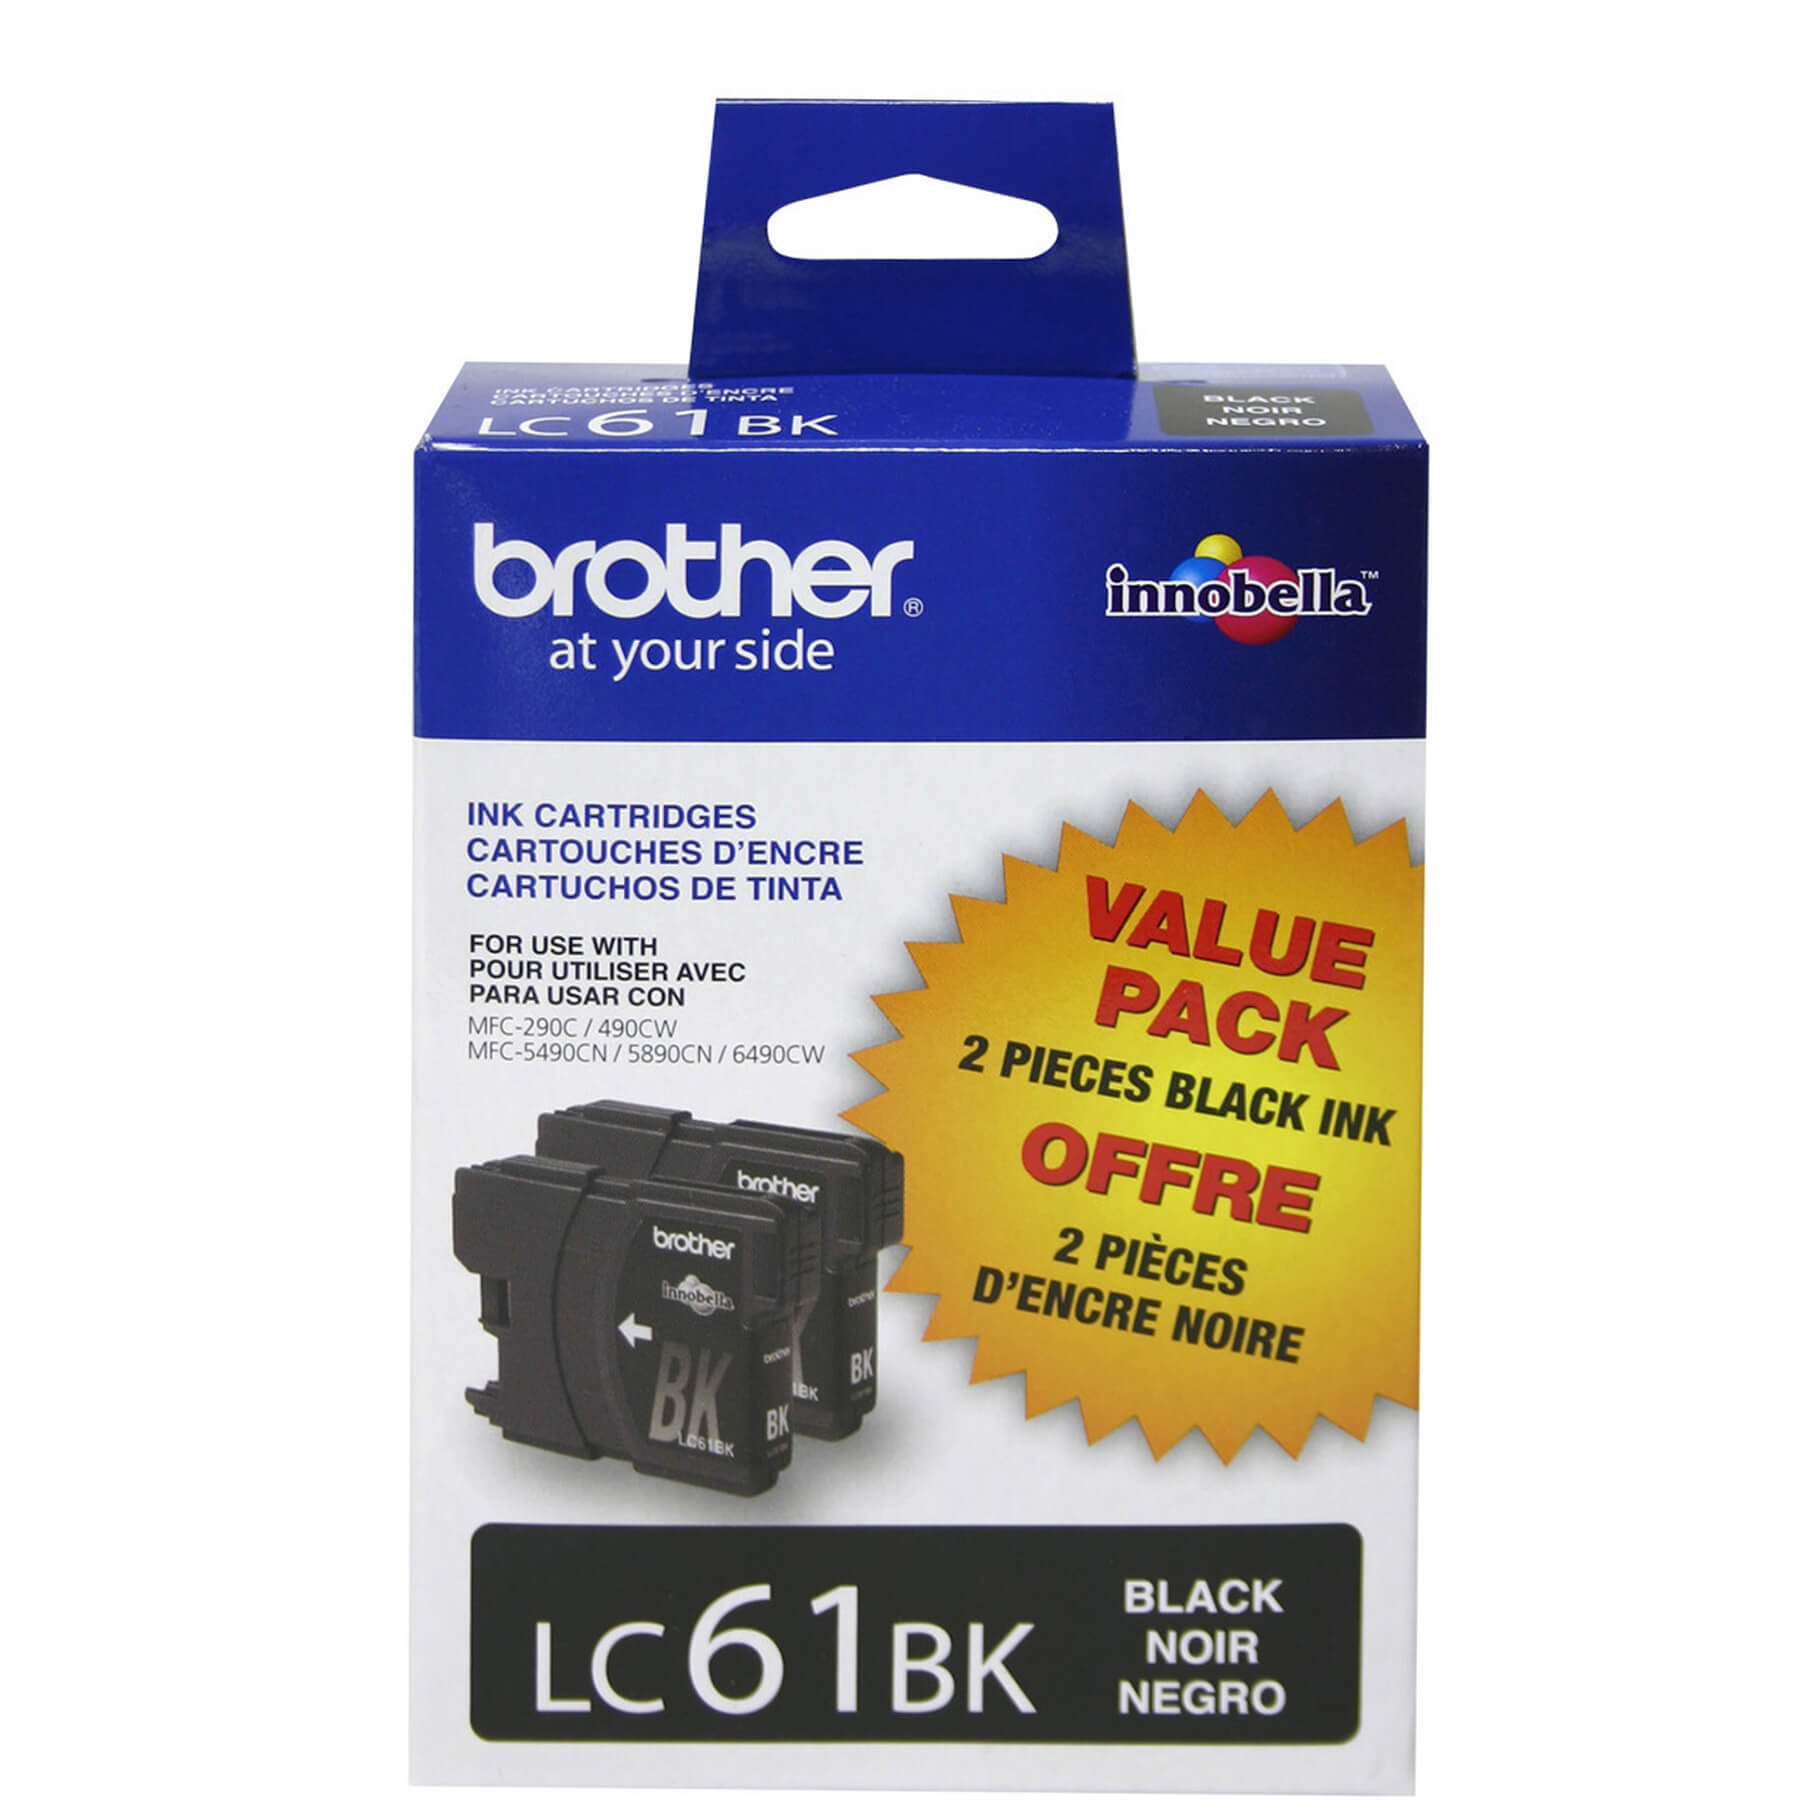 Brother LC612PKS 2-Pack of Innobella Black Ink Cartridges, Standard Yield